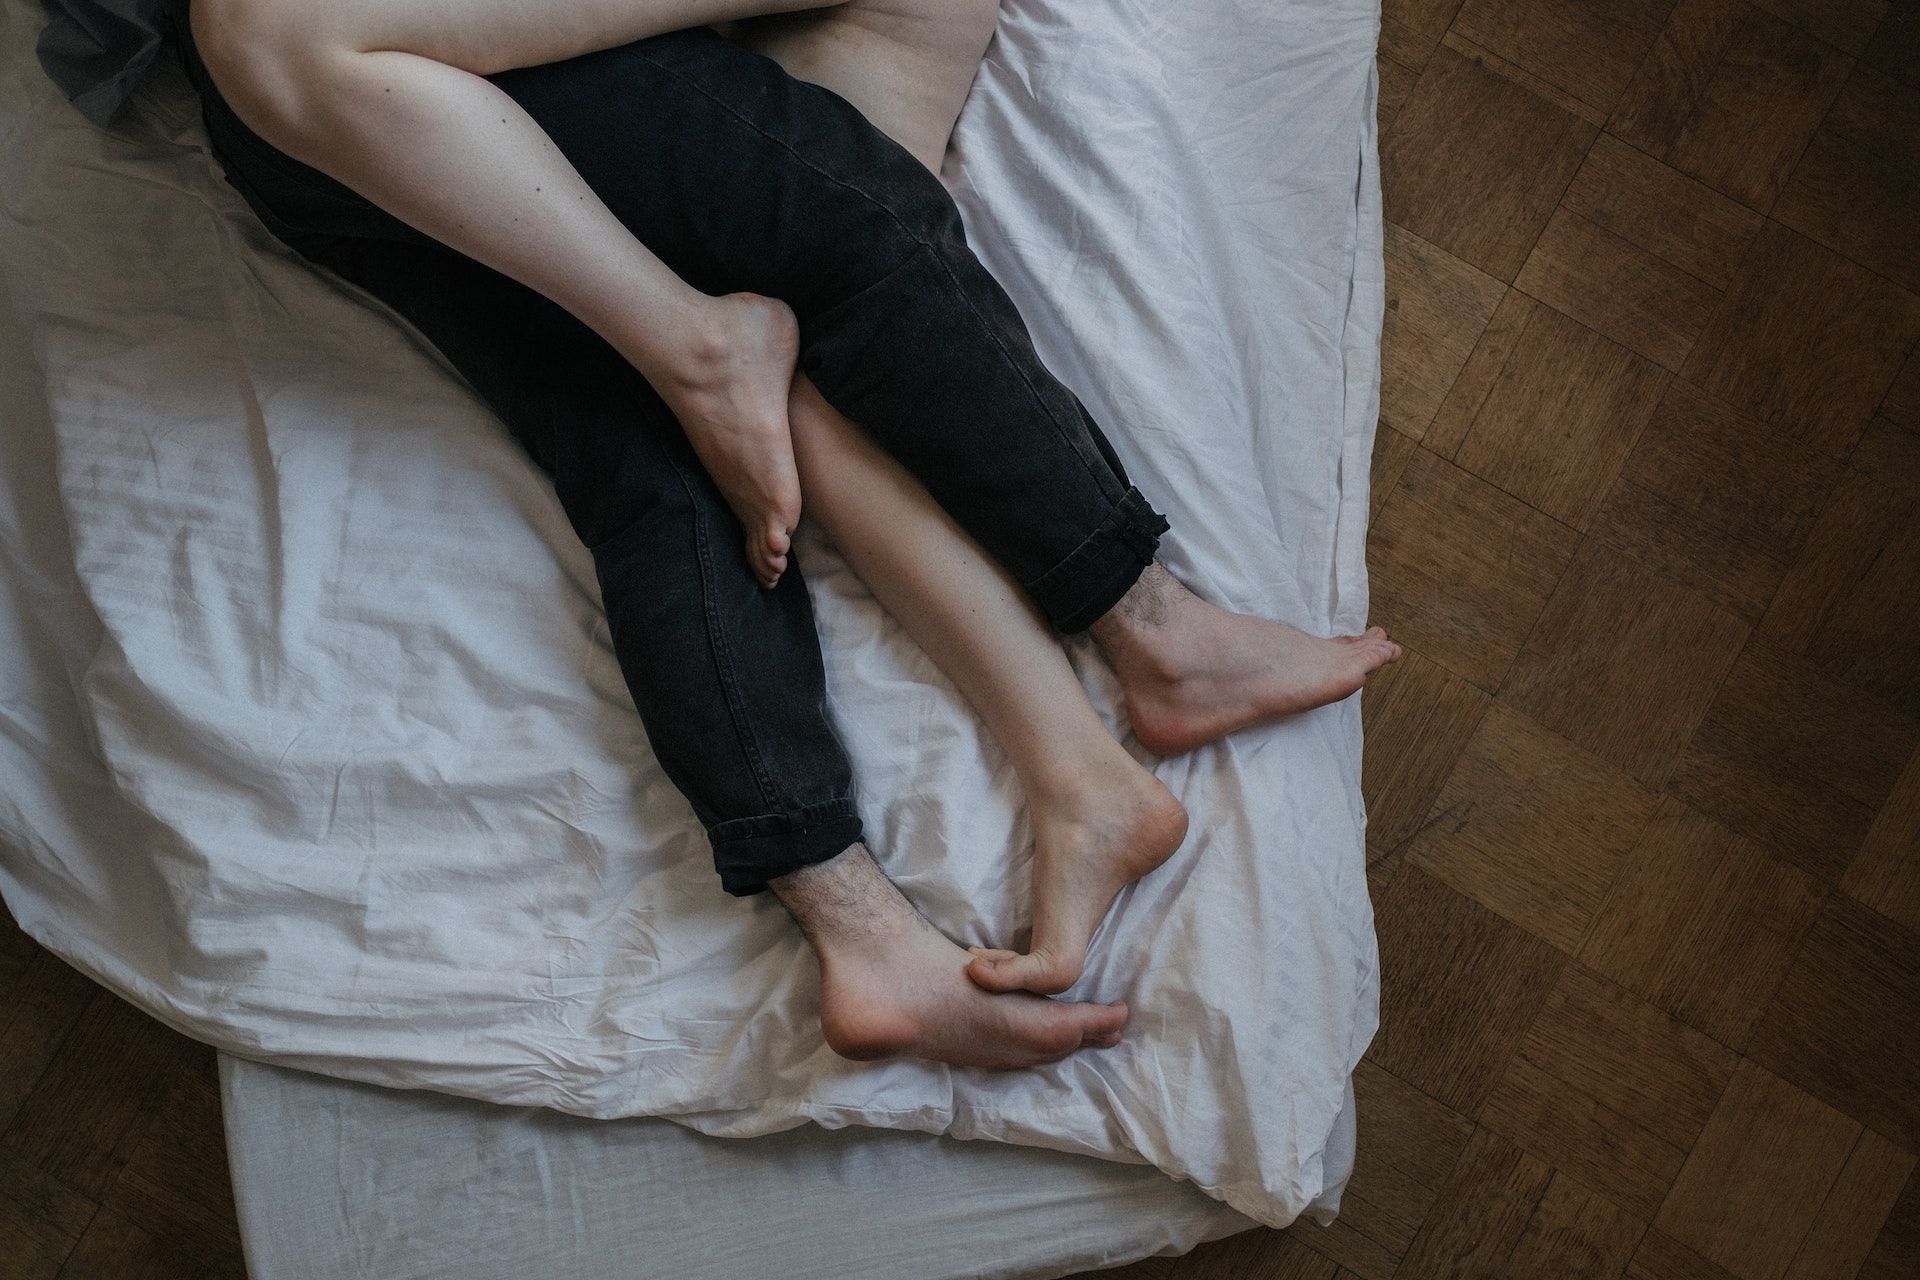 Pelvic floor exercises can improve sex life. (Photo via Pexels/Ron Lach)